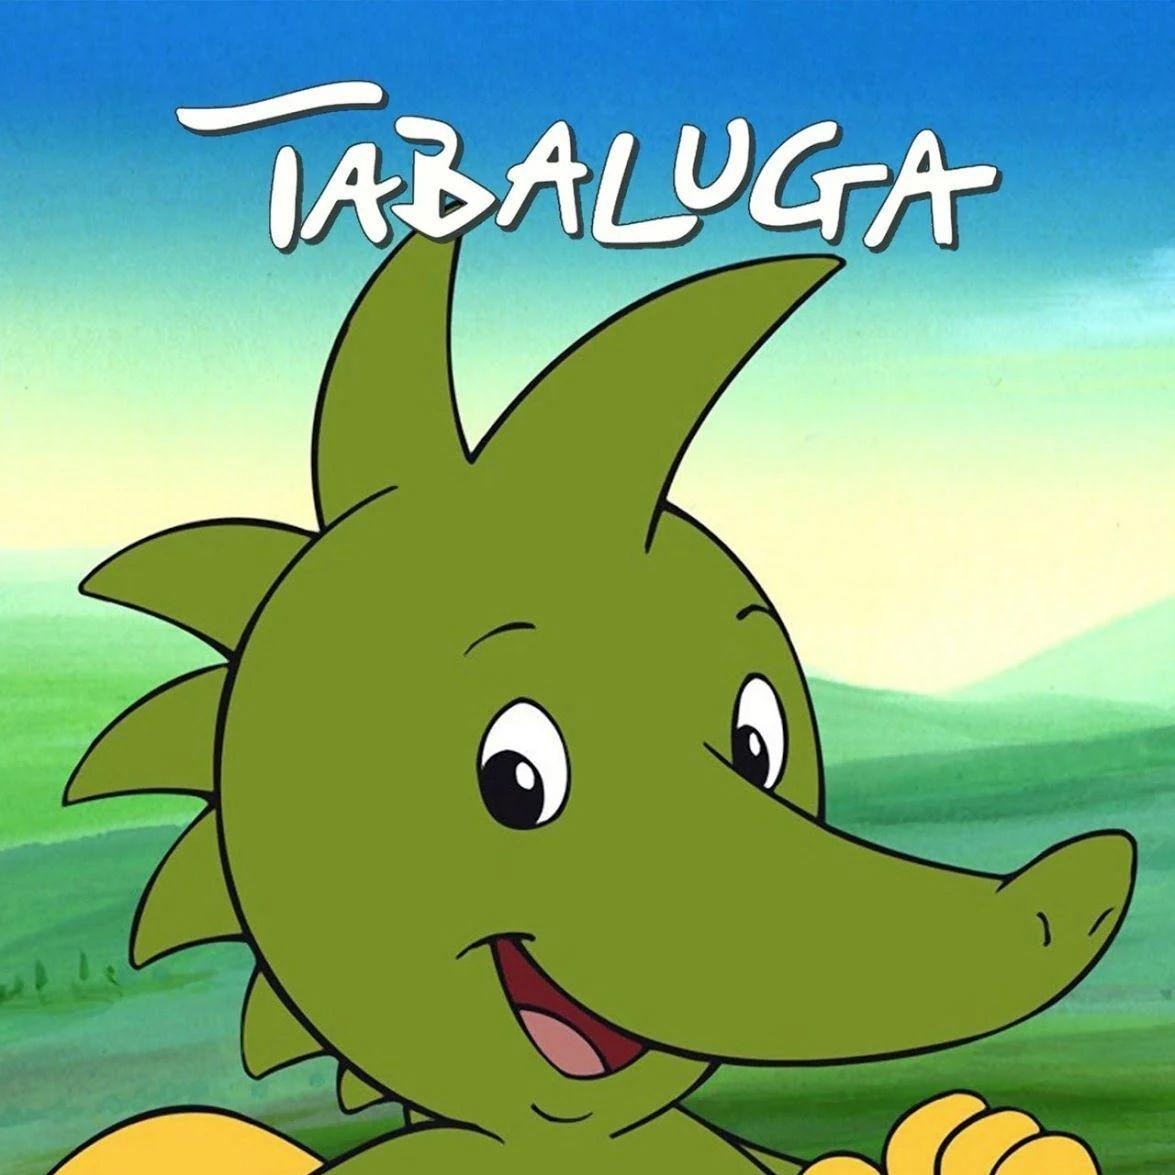 Player Tabaluga1908 avatar